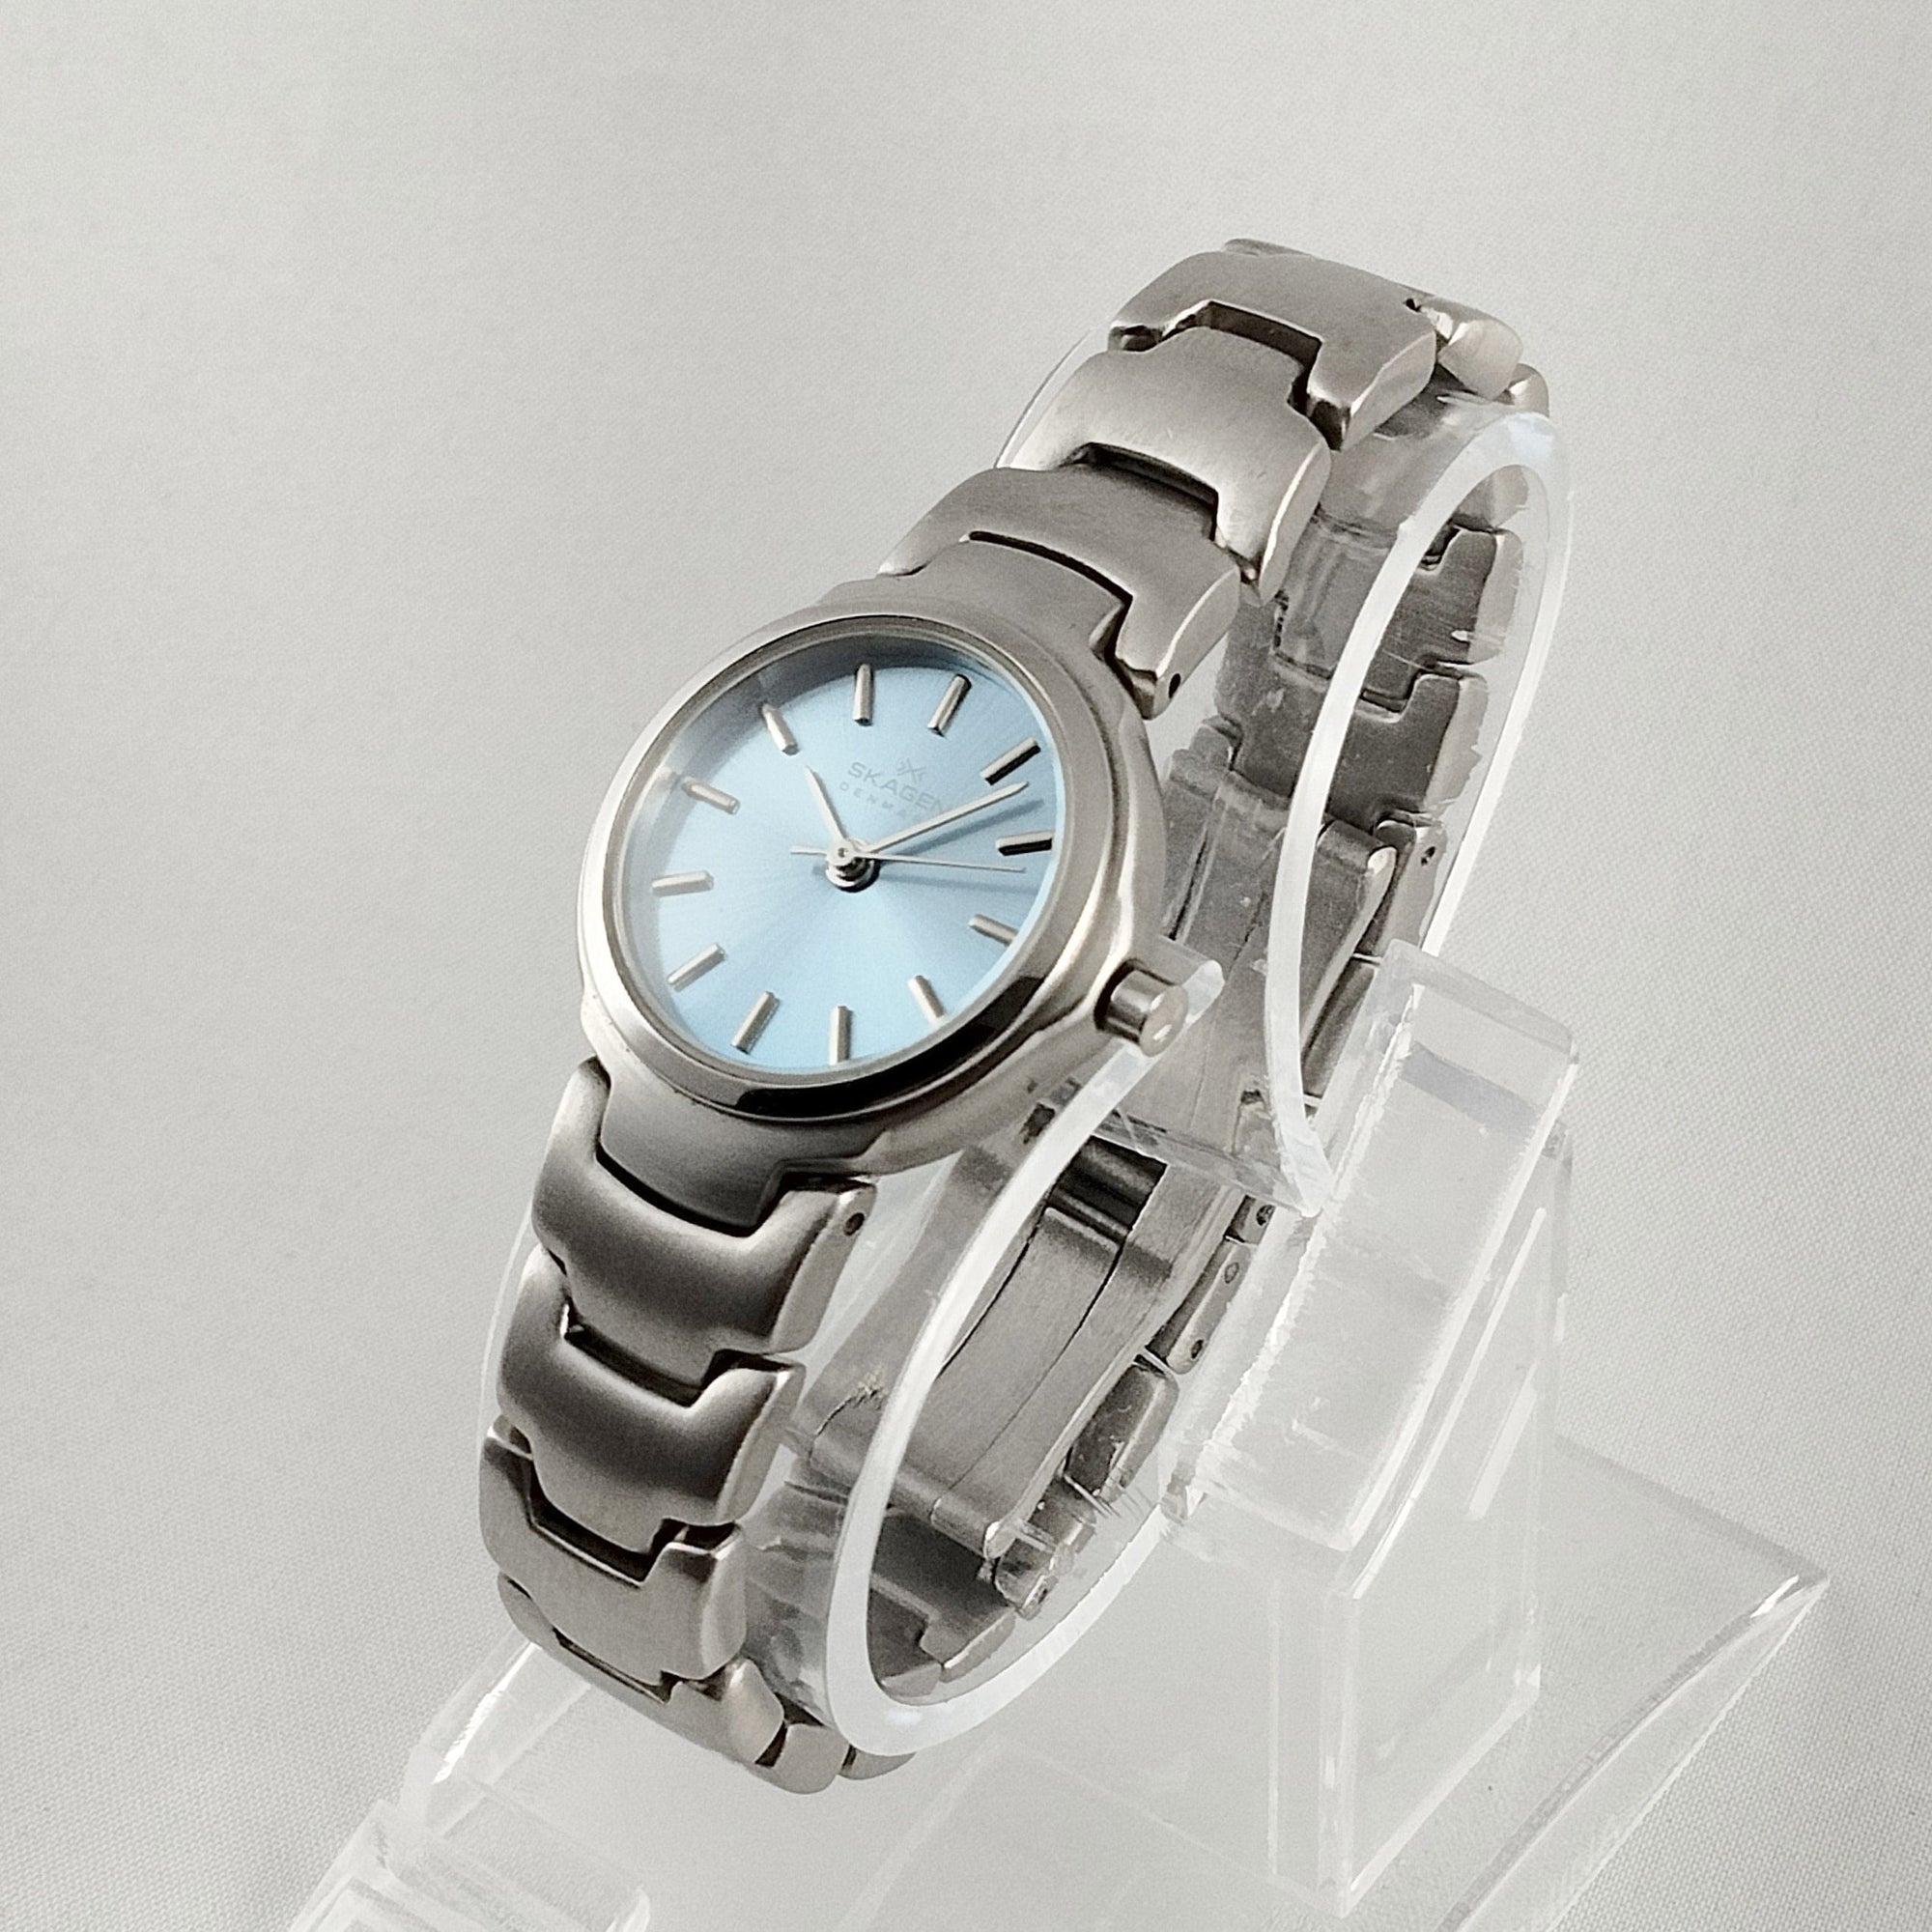 I Like Mikes Mid Century Modern Watches Skagen Women's Stainless Steel Watch, Light Blue Dial, Bracelet Strap